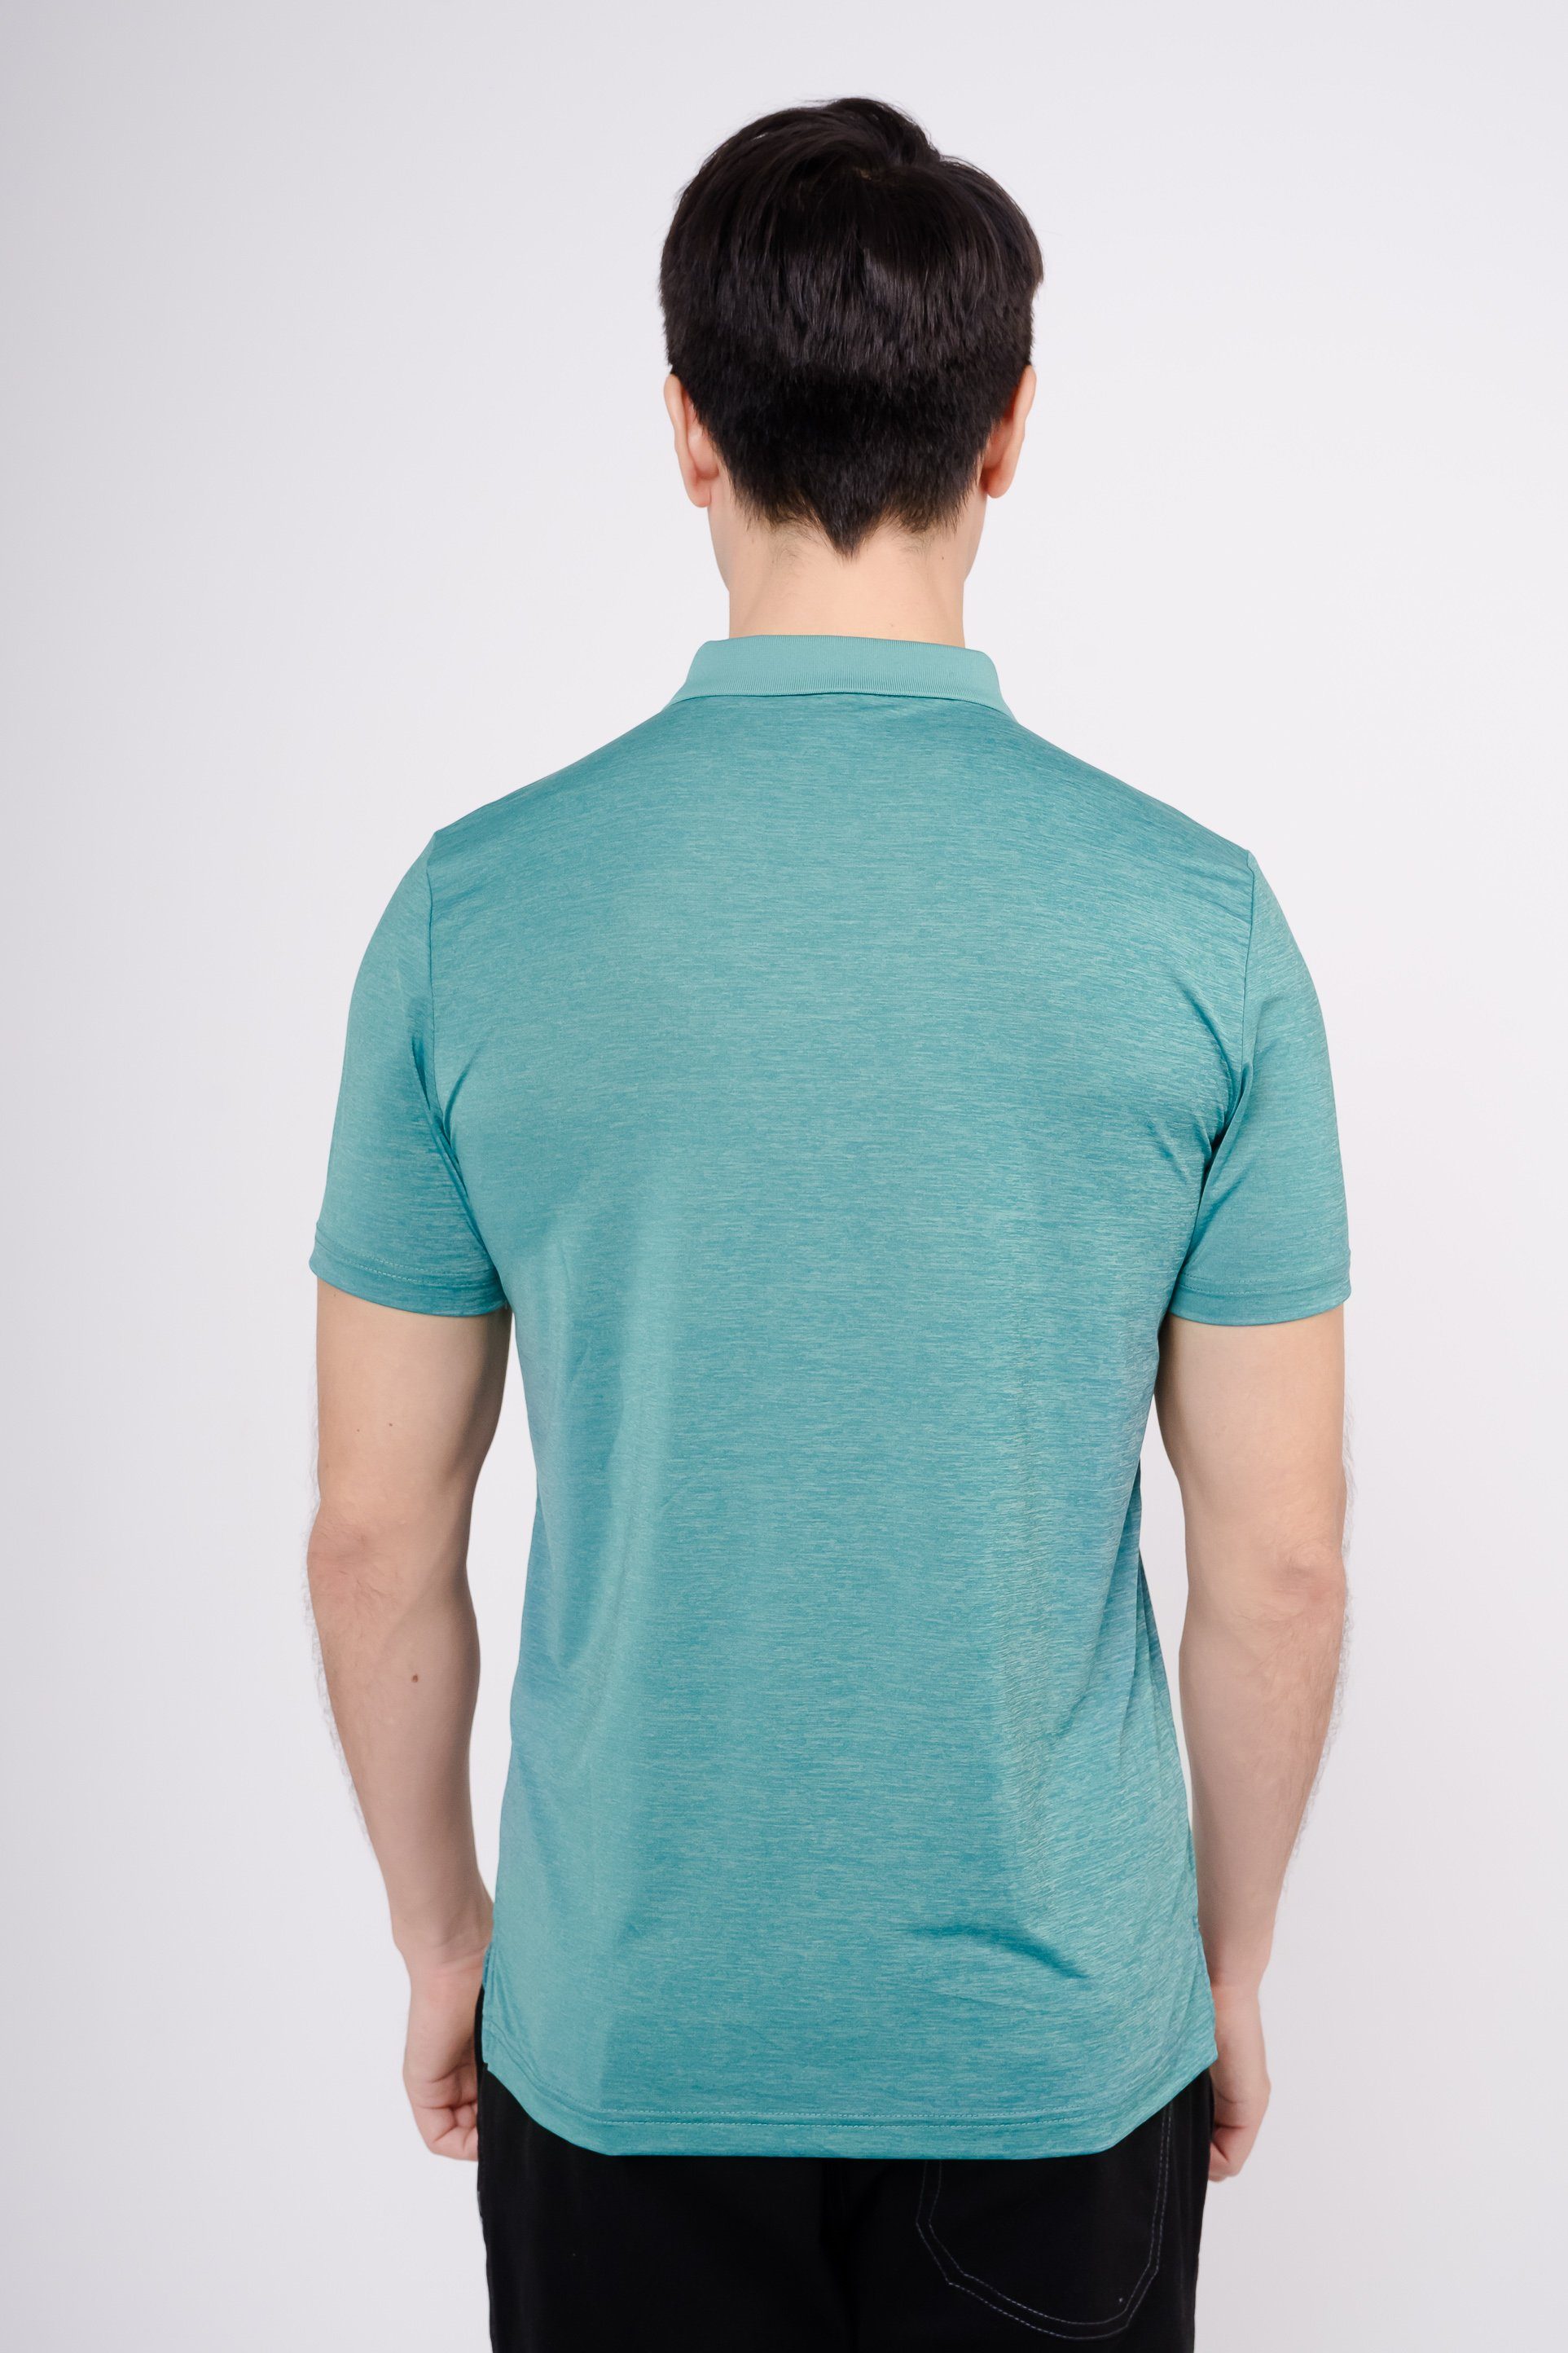 GIORDANO Poloshirt grün-meliert mit Touch-Effekt Cool